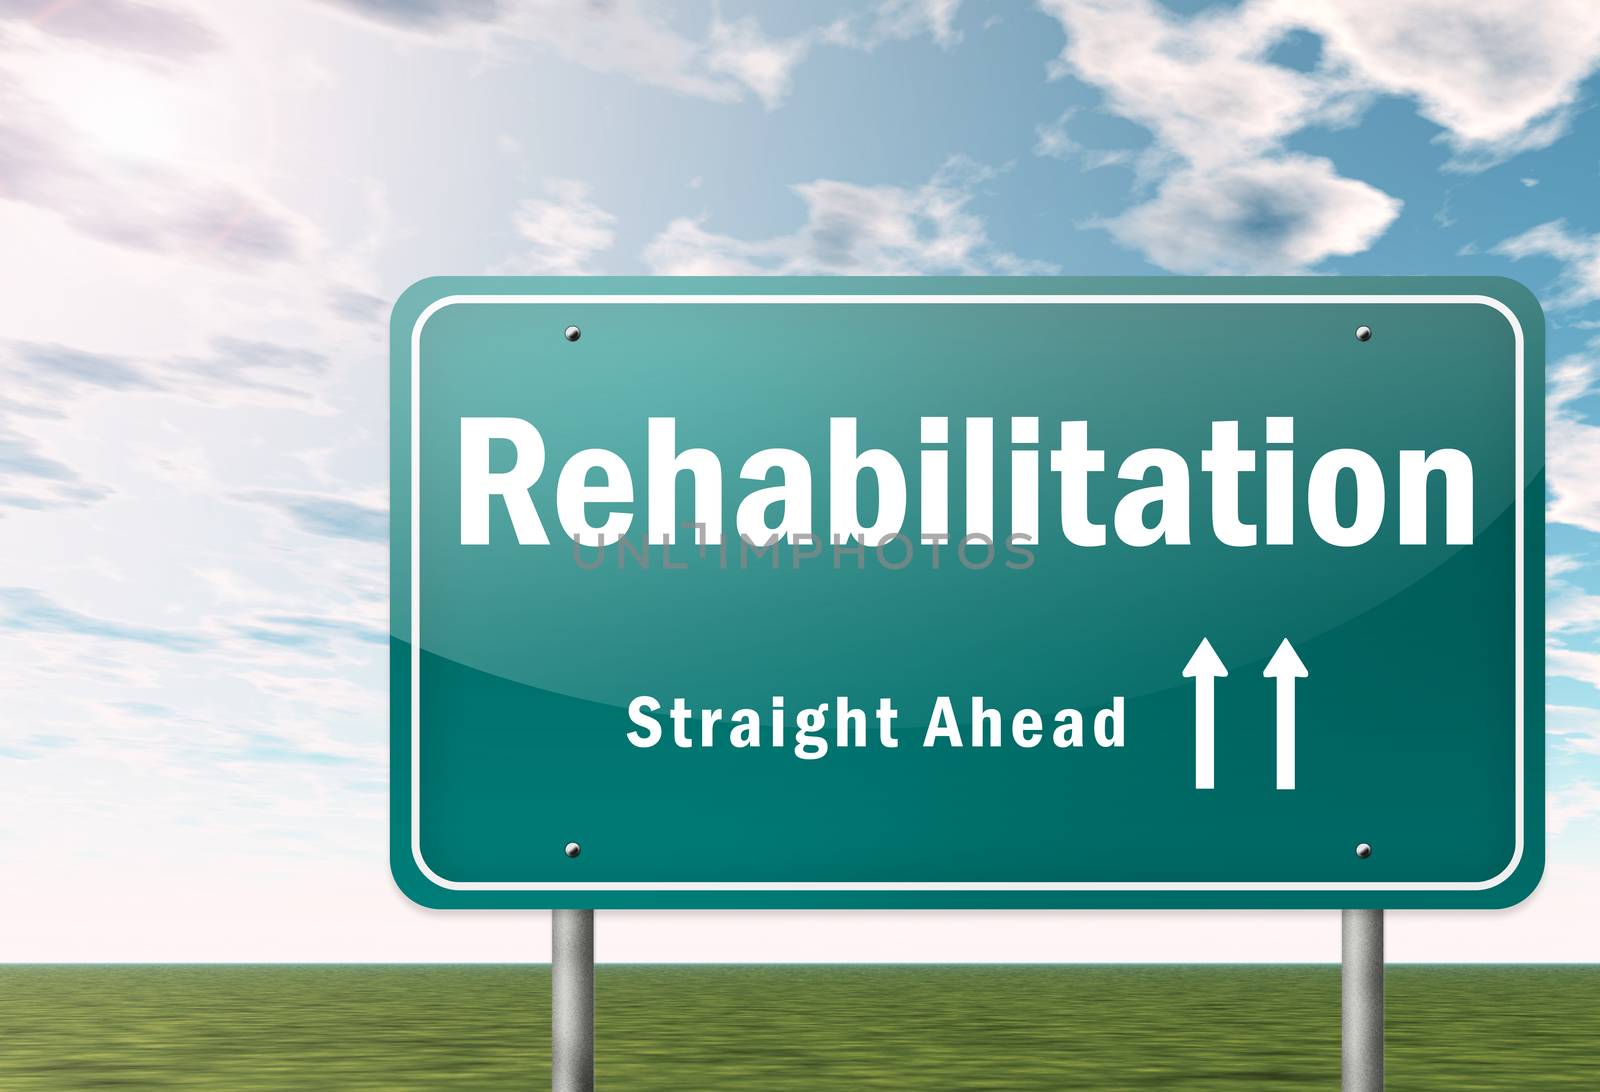 Highway Signpost Rehabilitation by mindscanner